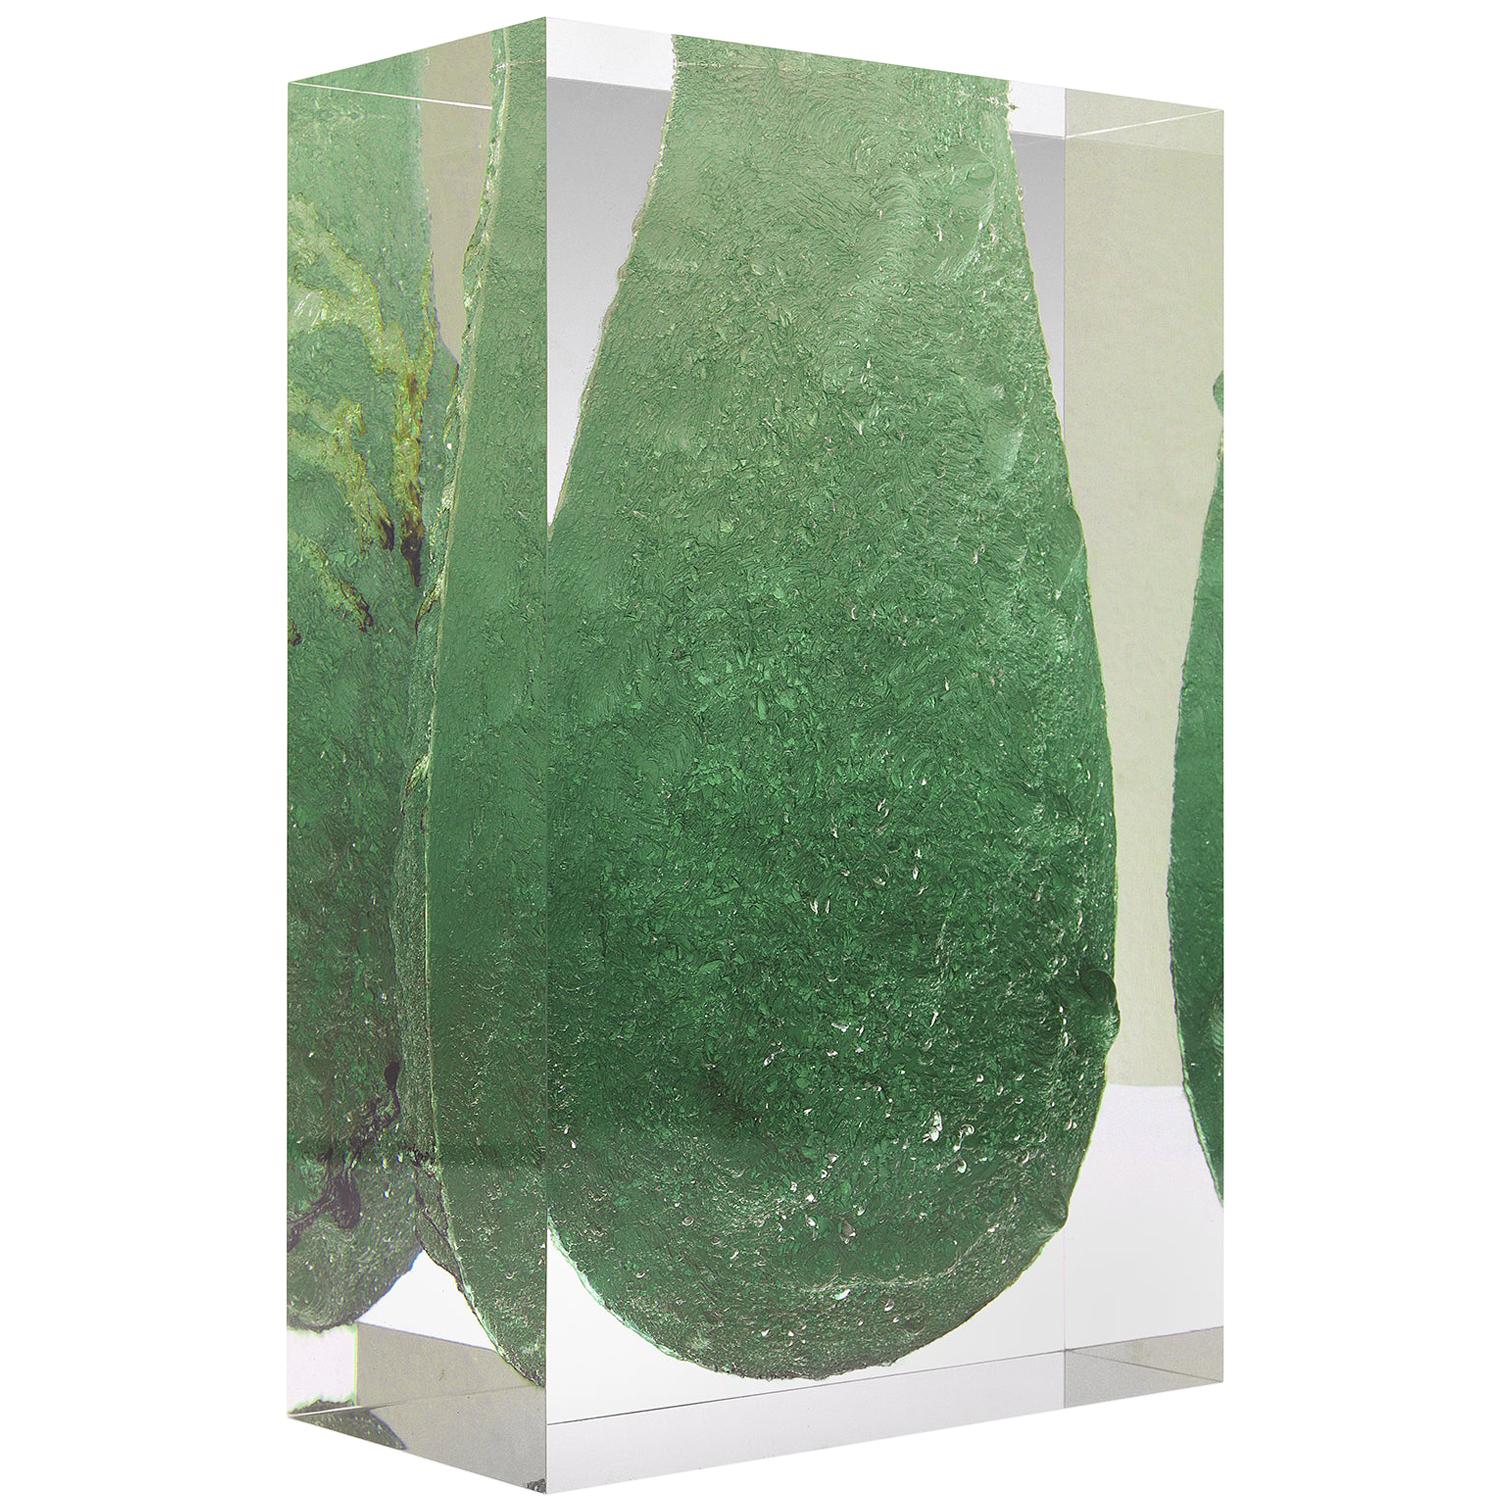 Glacoja-Vase des 21. Jahrhunderts aus handgefertigtem Methacrylat von Analogia Project